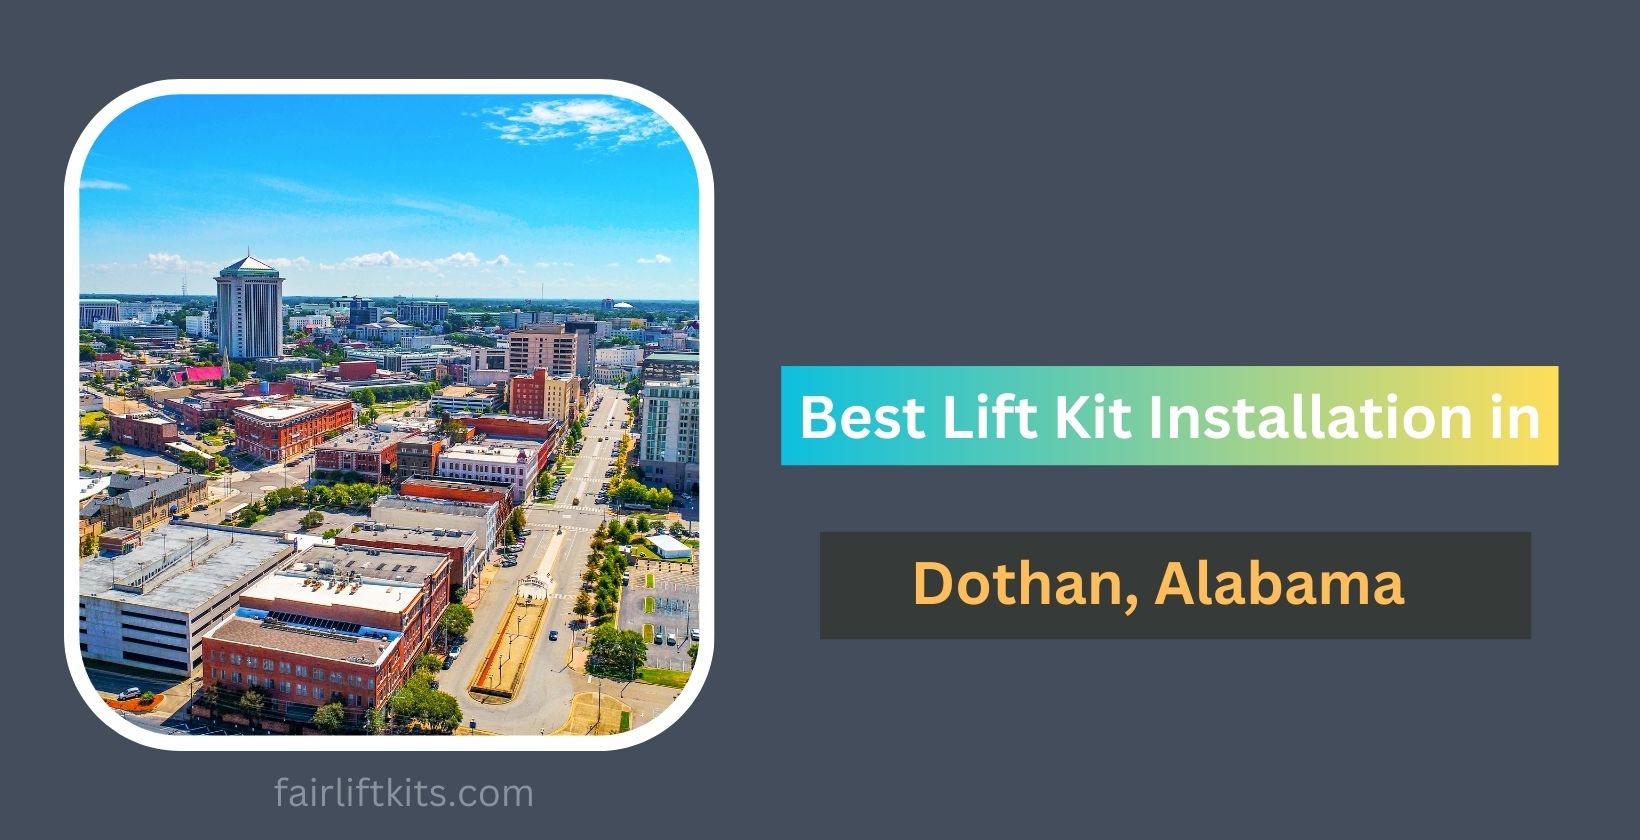 10 Best Lift Kit Installation Near Me in Dothan